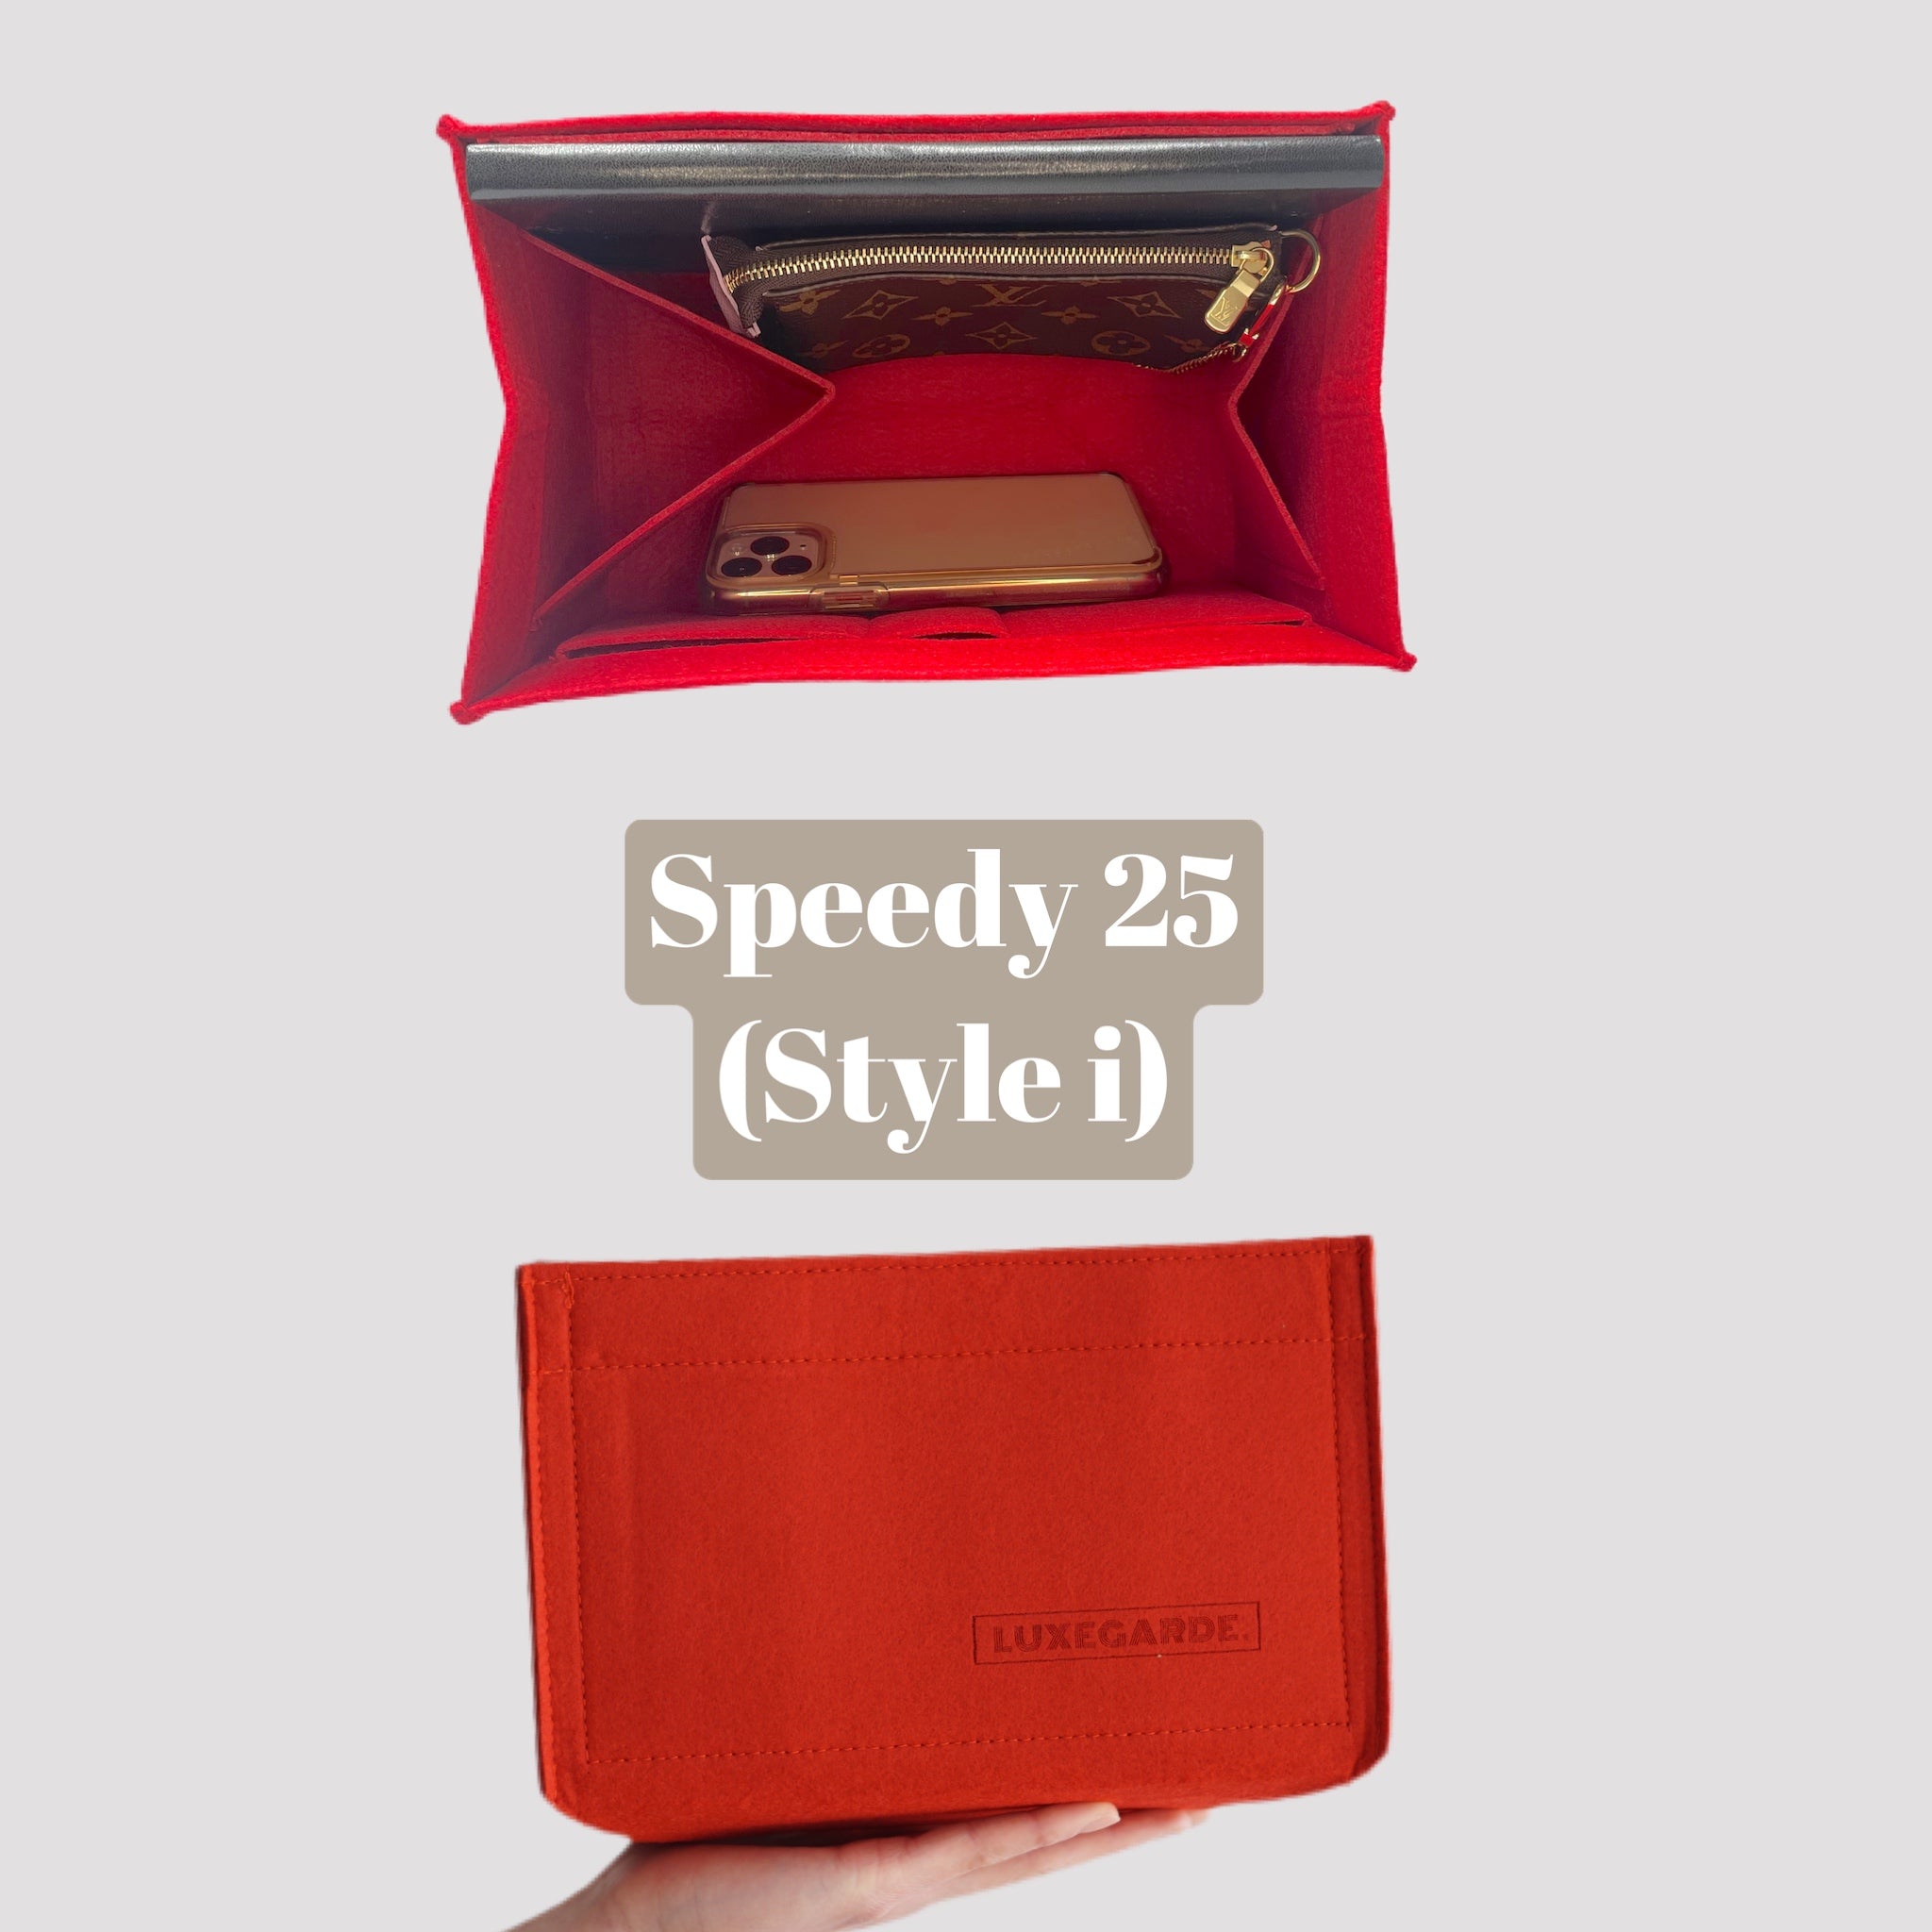 LV Speedy B 25 Review  CloverSac Bag Organiser 